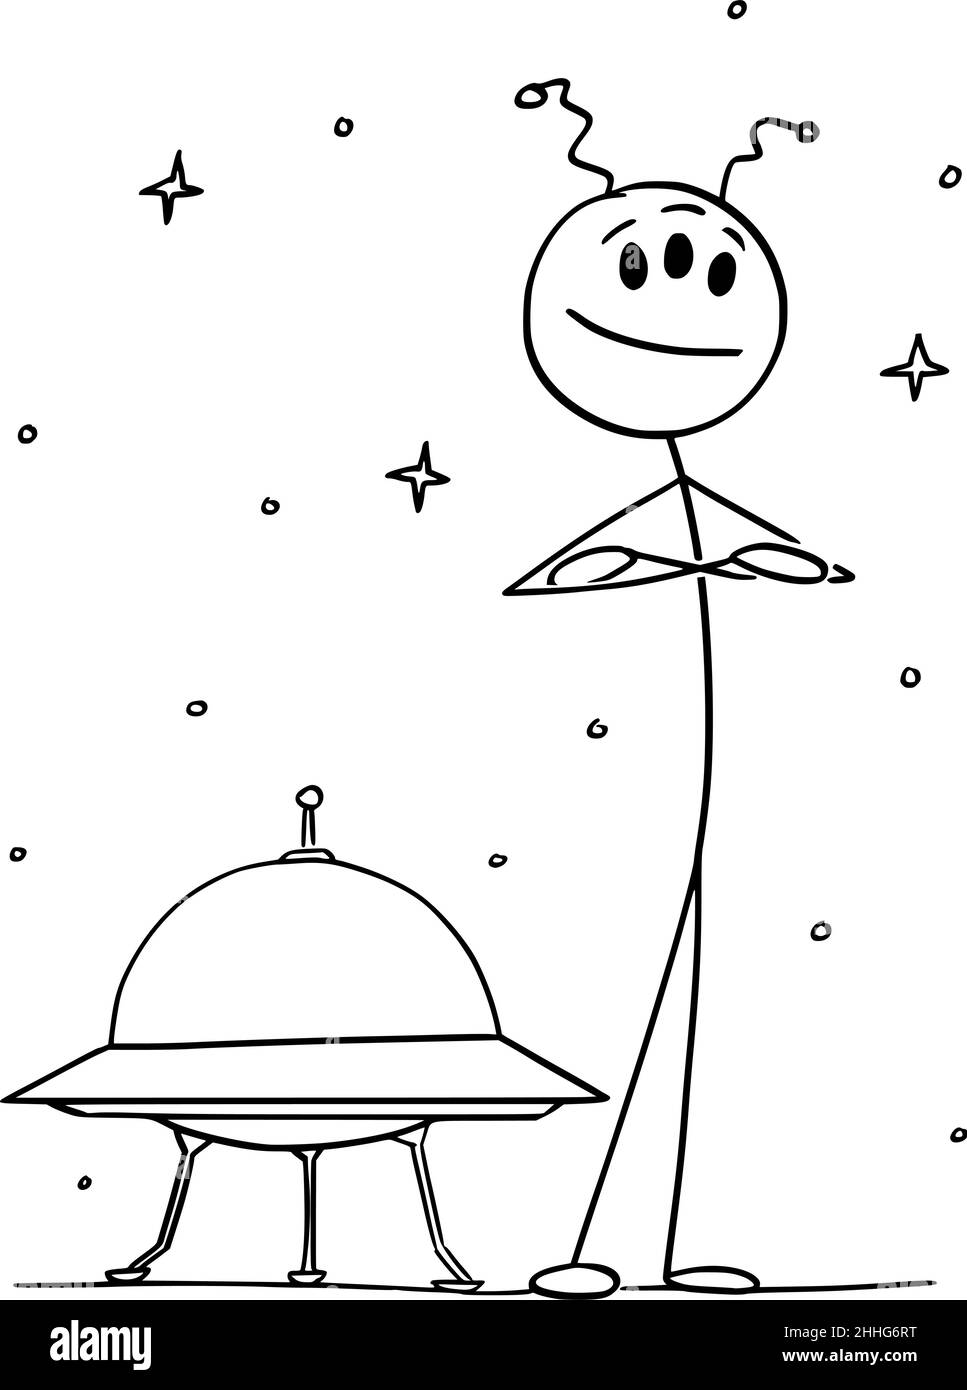 Cute Friendly Alien Standing in Front of UFO Spaceship, Vector Cartoon Stick Figure Illustration Stock Vector